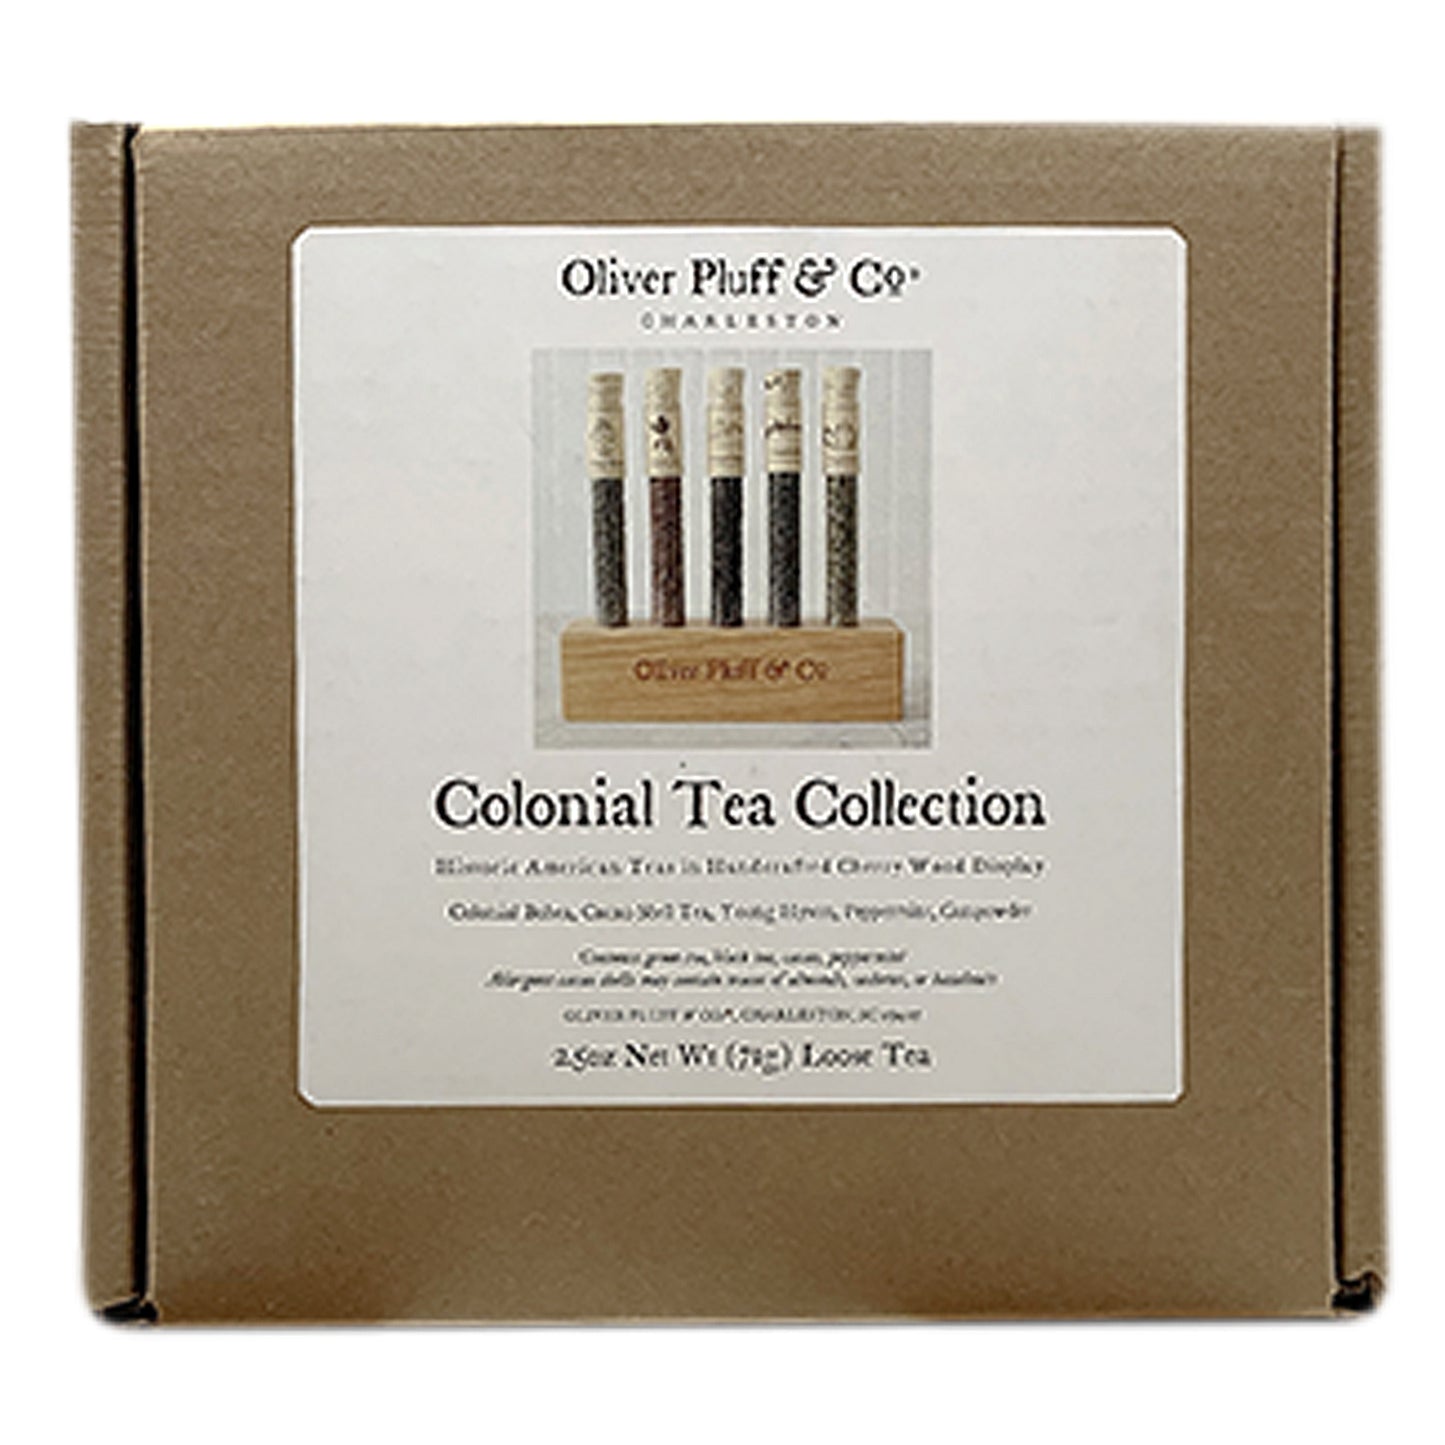 Colonial Tea Collection